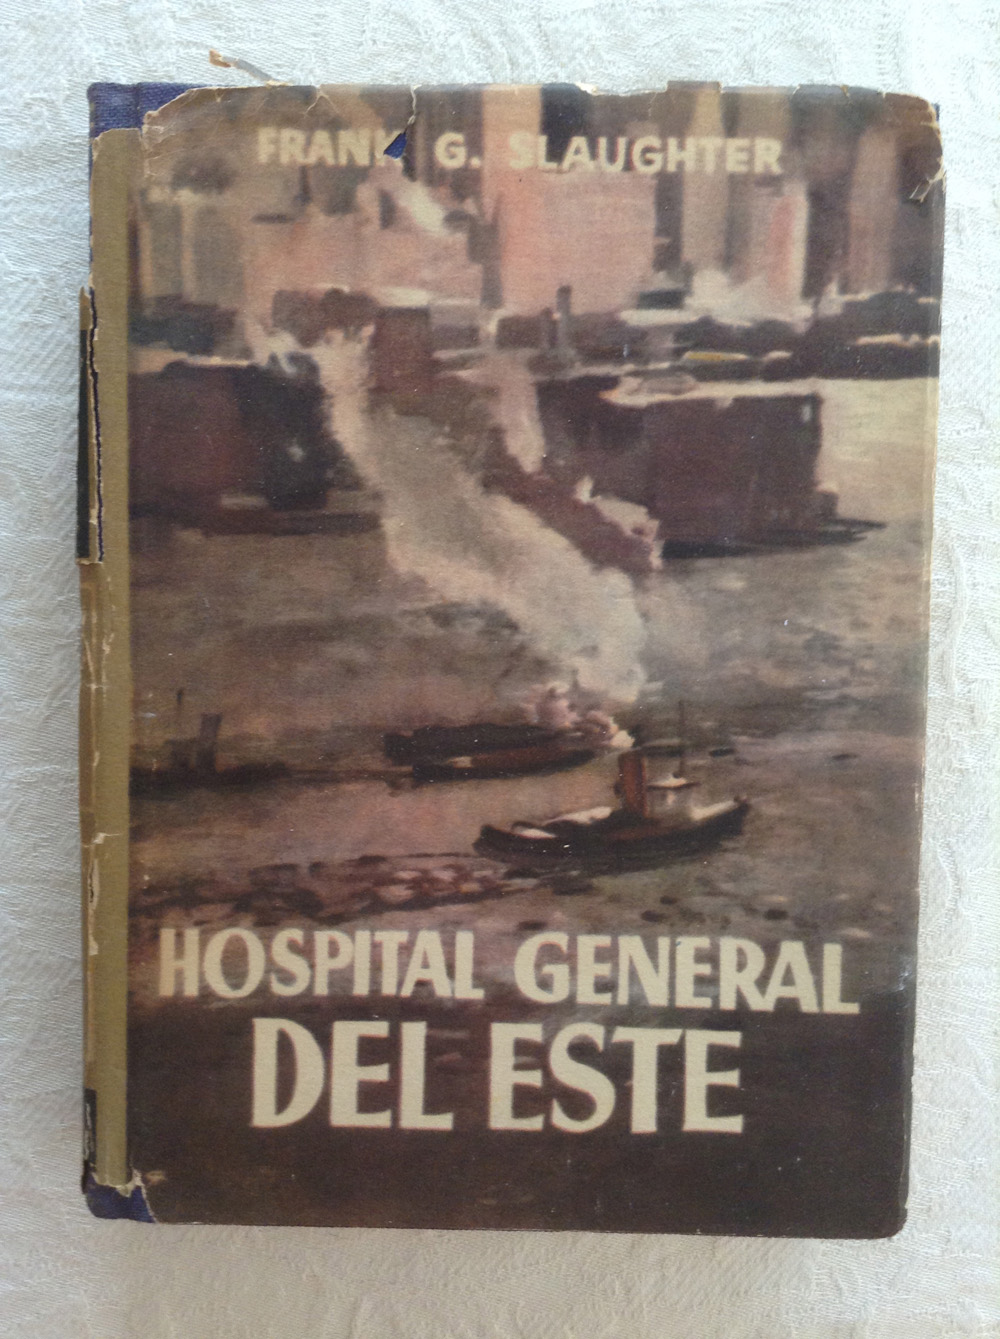 Hospital general del este